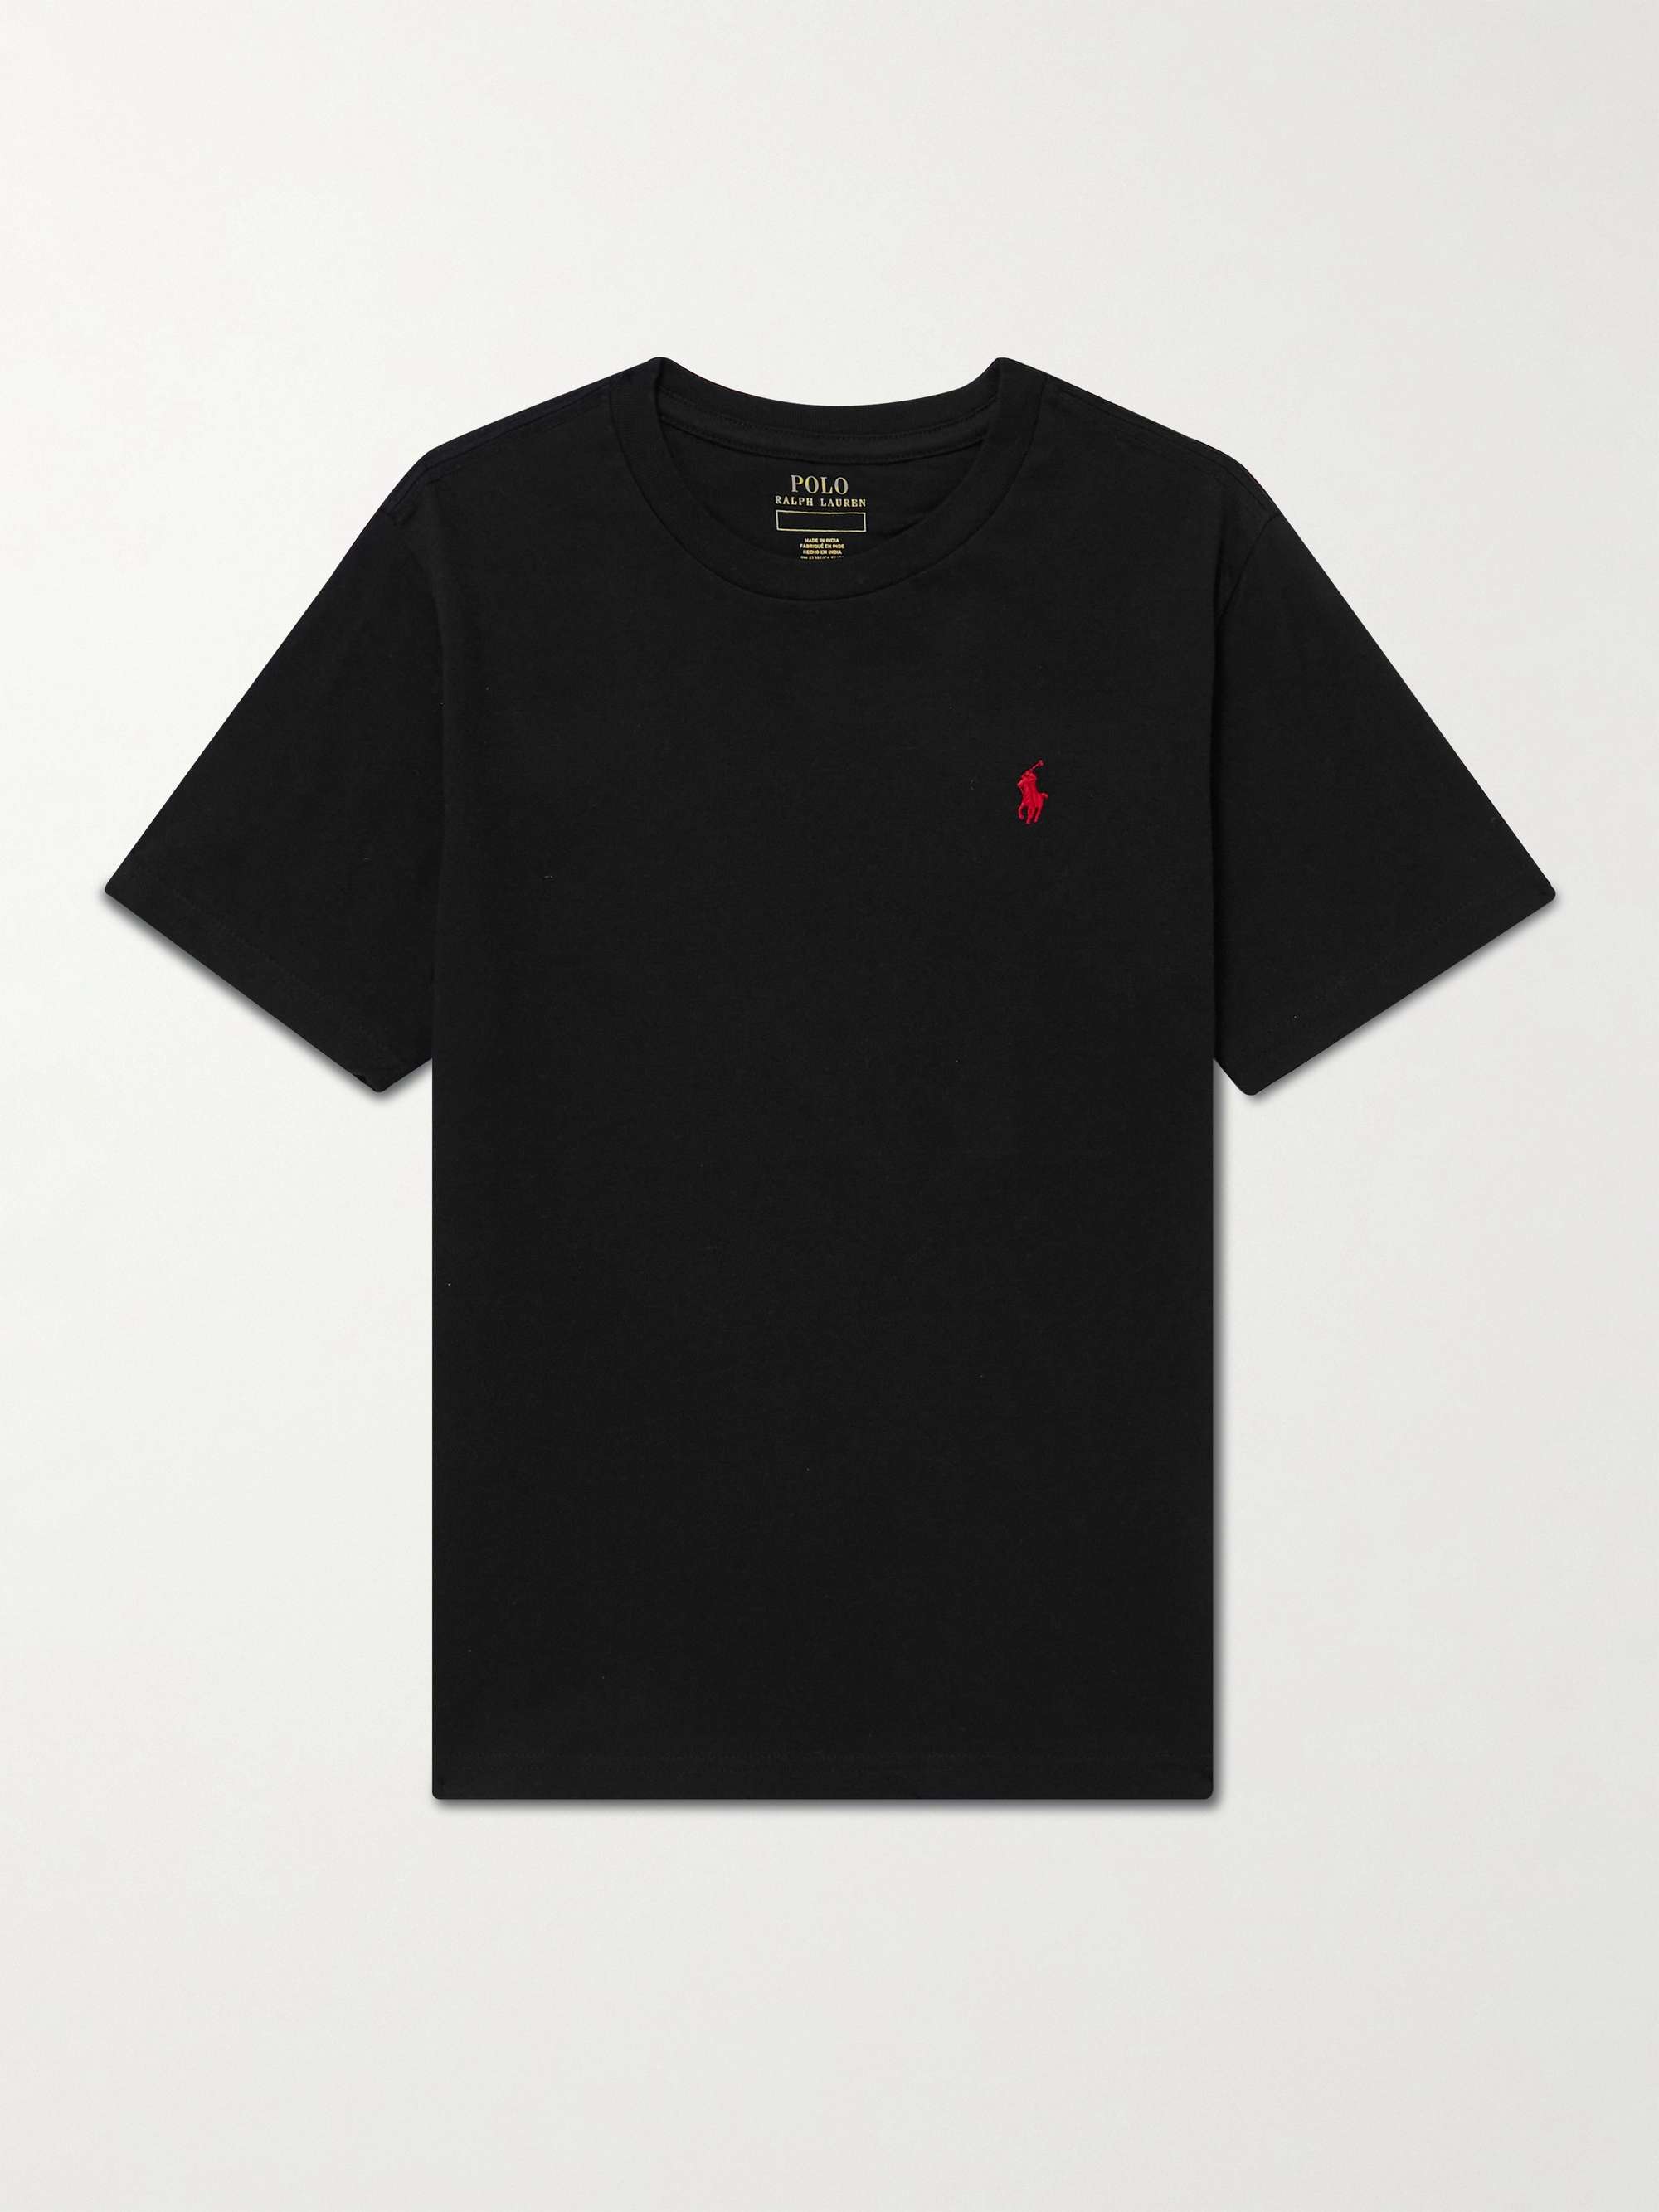 POLO RALPH LAUREN KIDS Logo-Embroidered Cotton-Jersey T-Shirt | MR PORTER